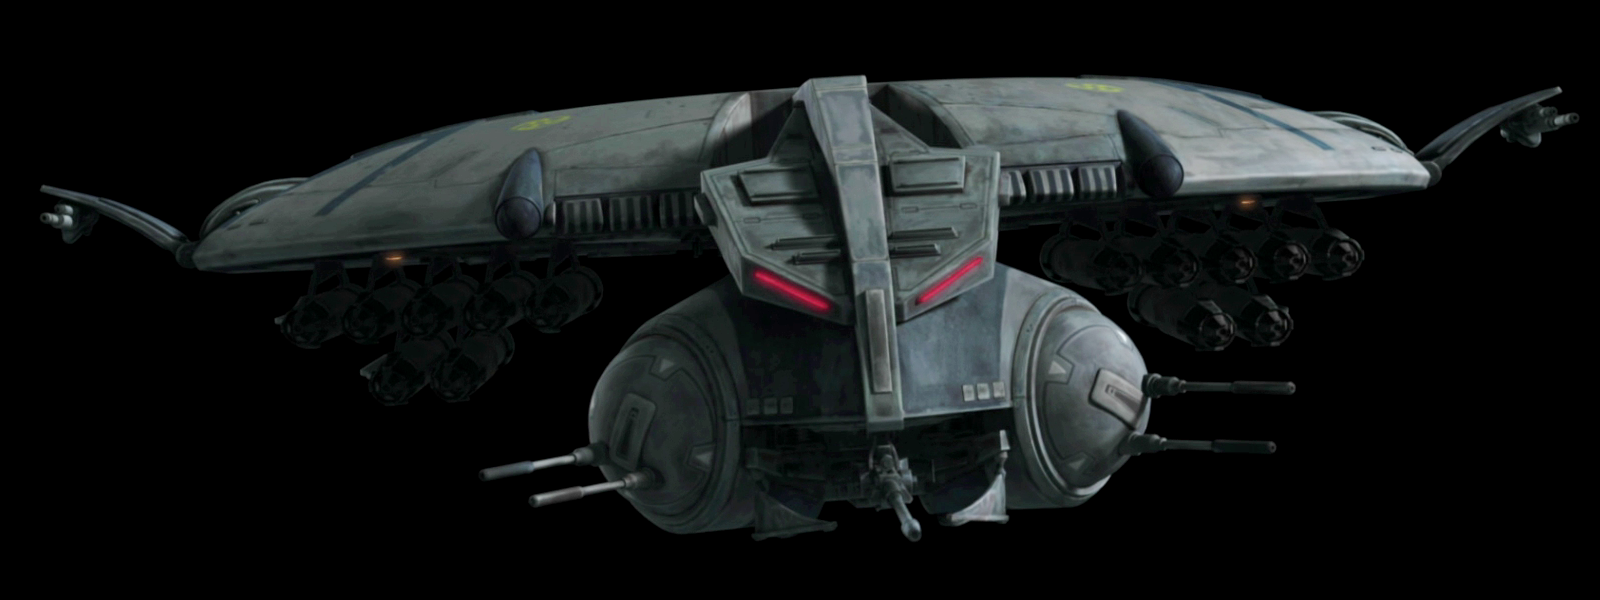 star wars droid gunship